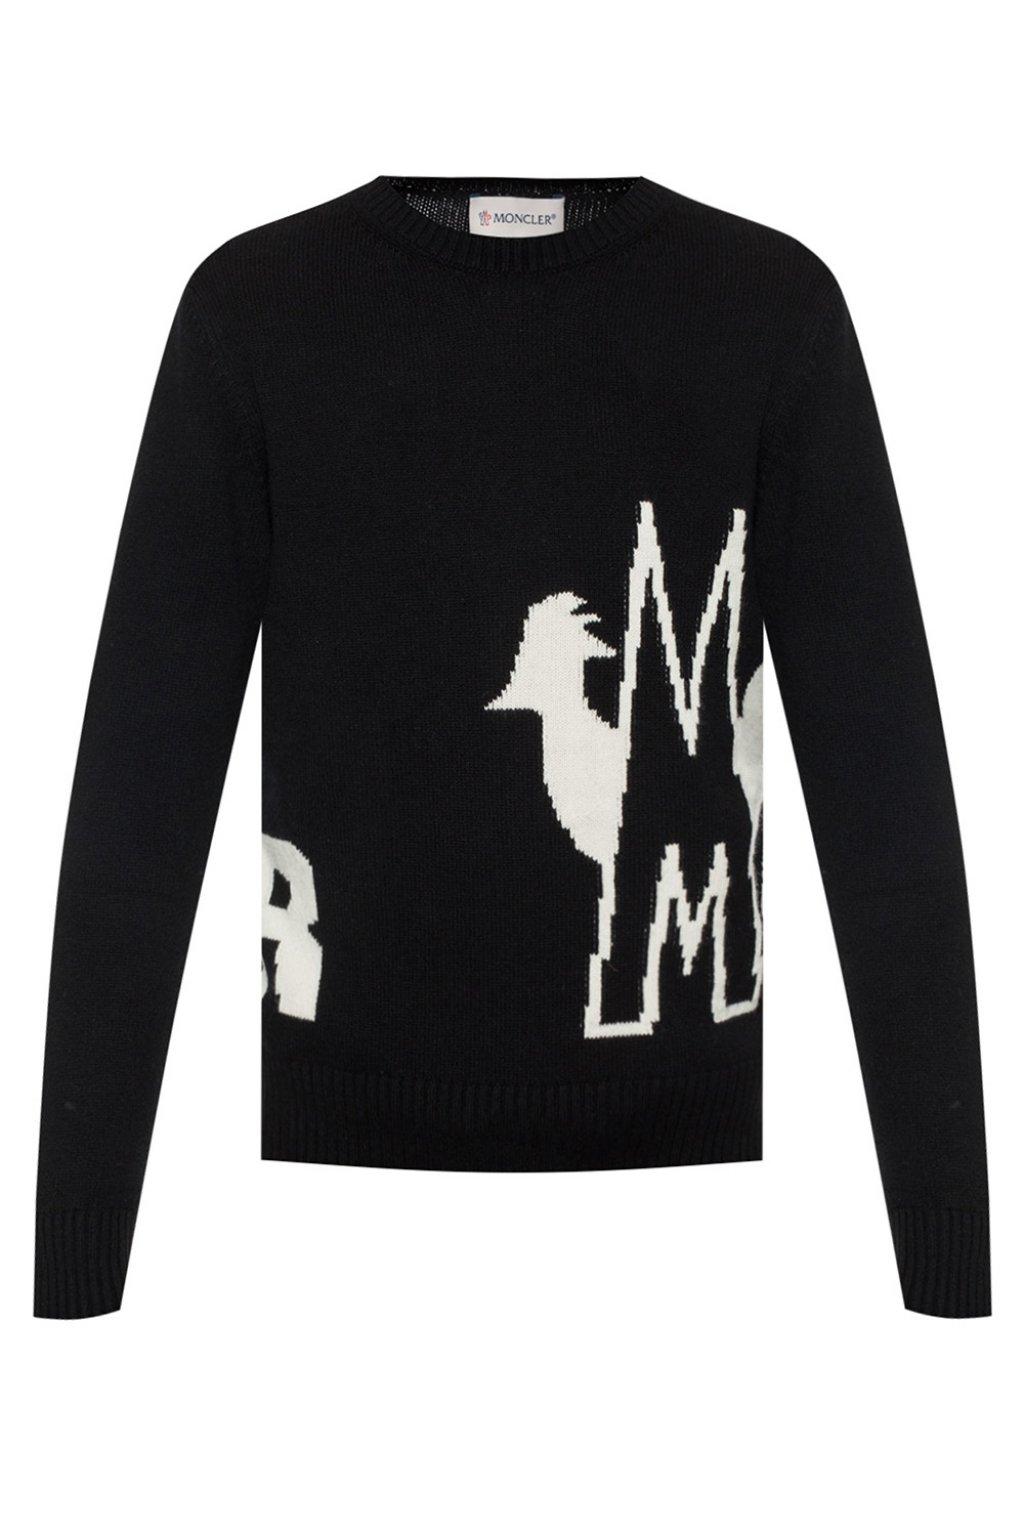 Moncler Wool Logo Sweater in Black for Men - Lyst